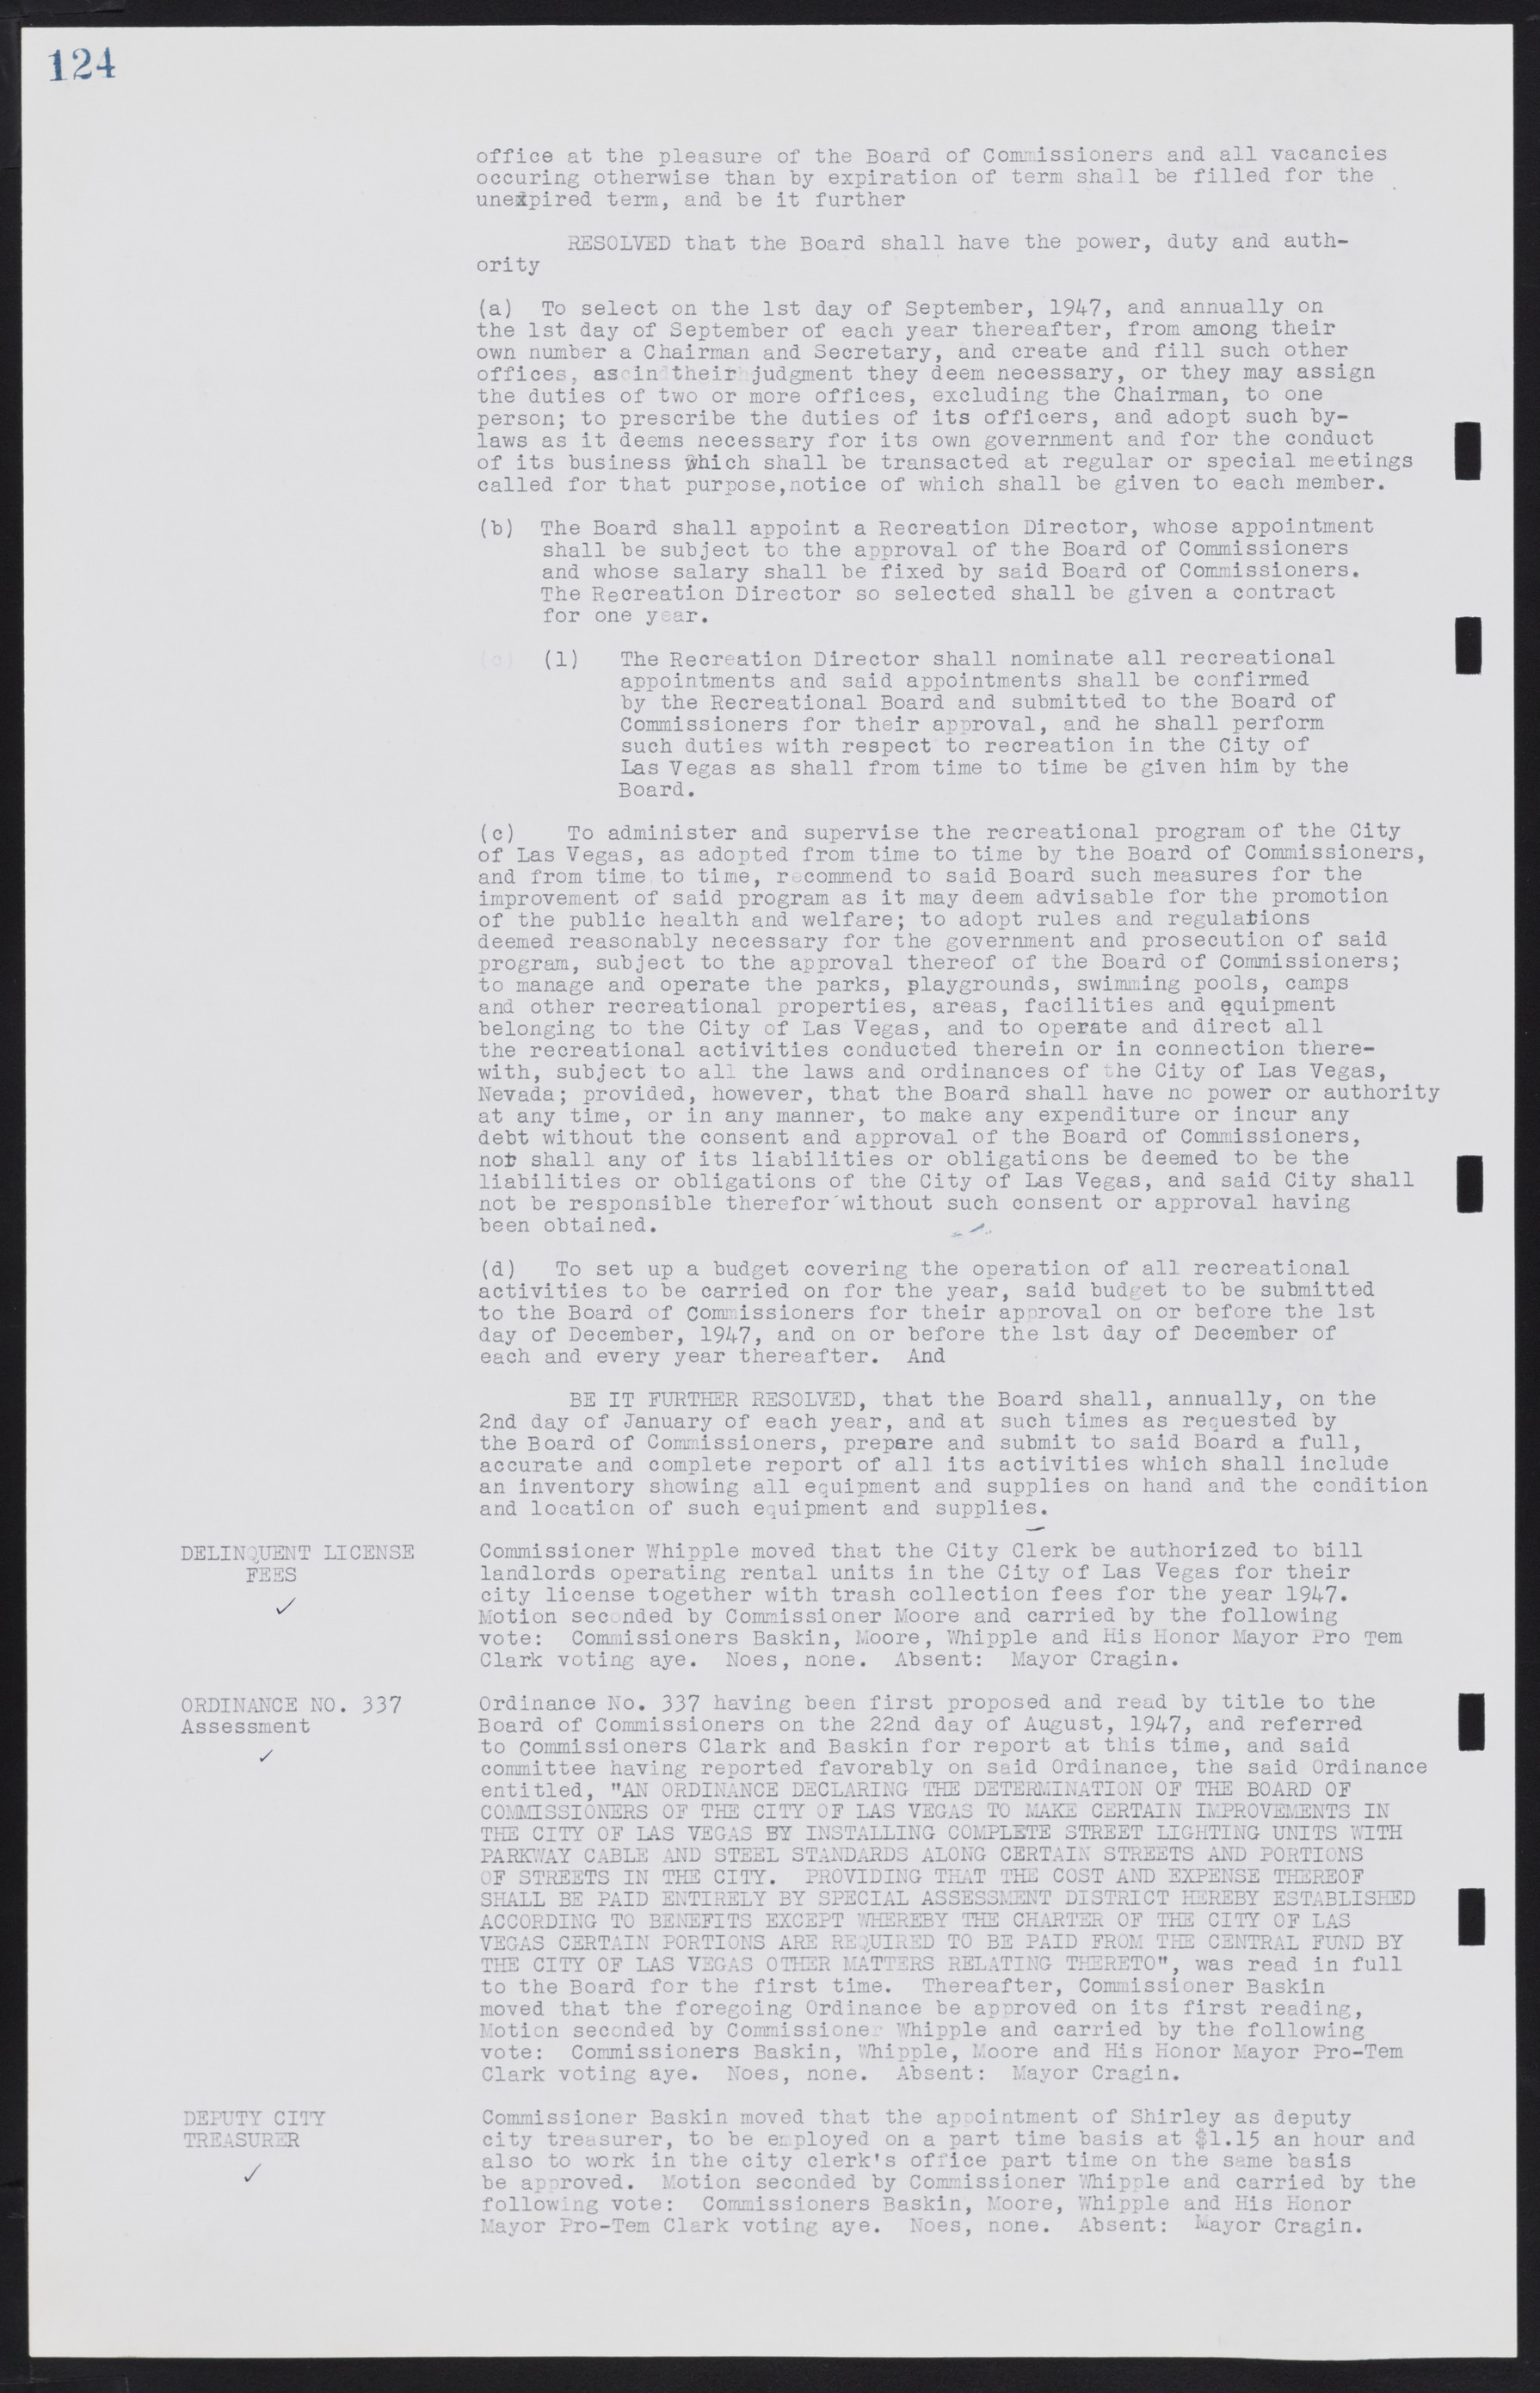 Las Vegas City Commission Minutes, January 7, 1947 to October 26, 1949, lvc000006-142